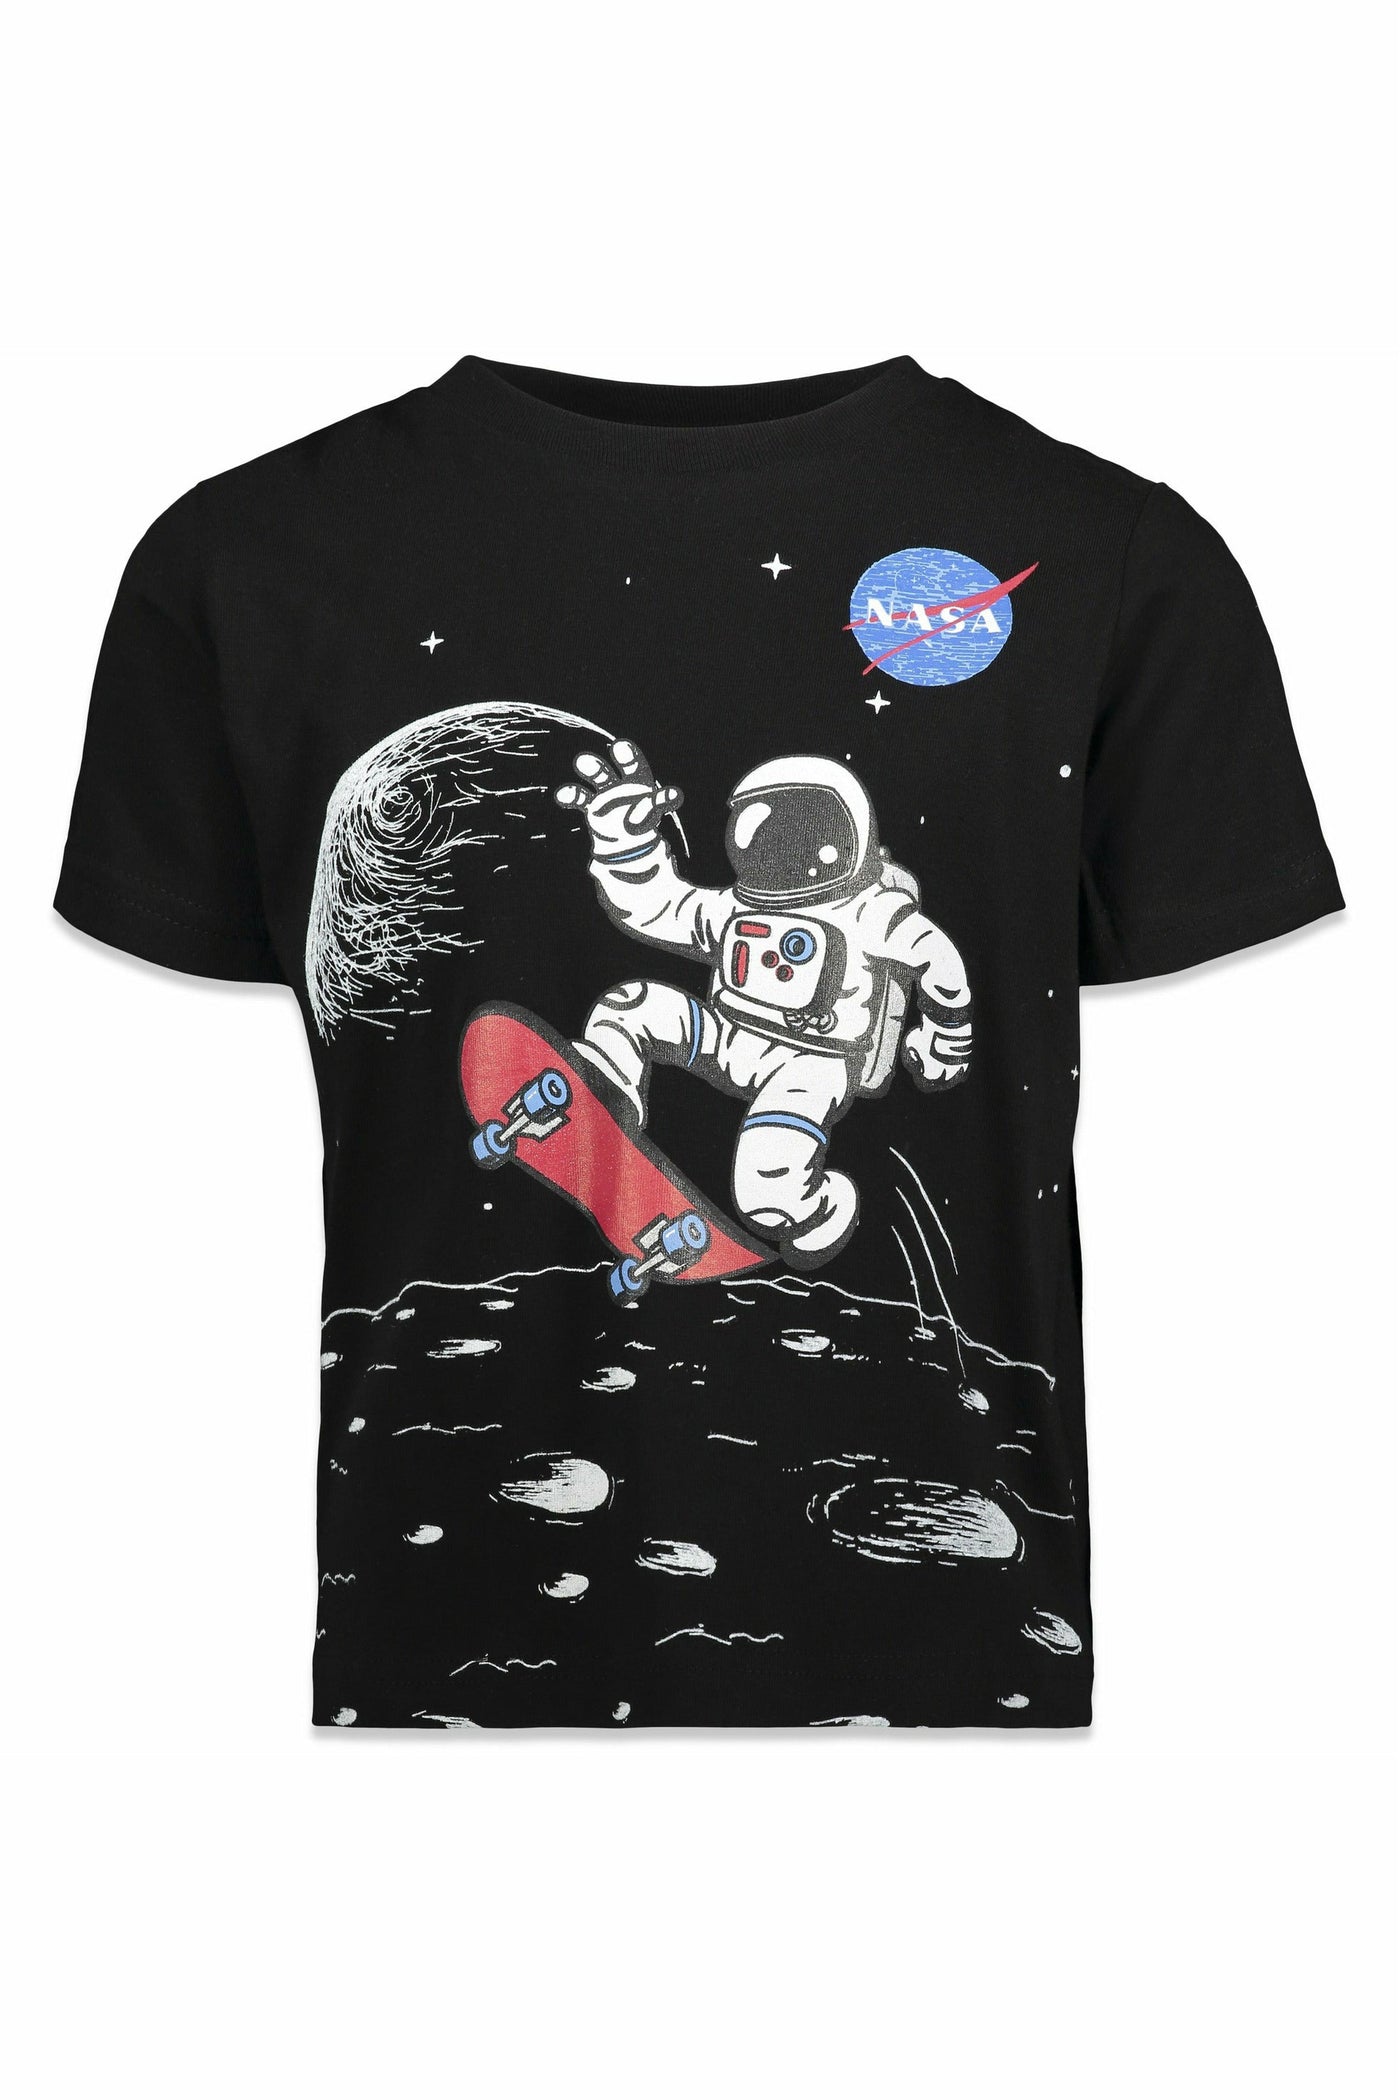 NASA 3 Pack Short Sleeve Graphic T-Shirt